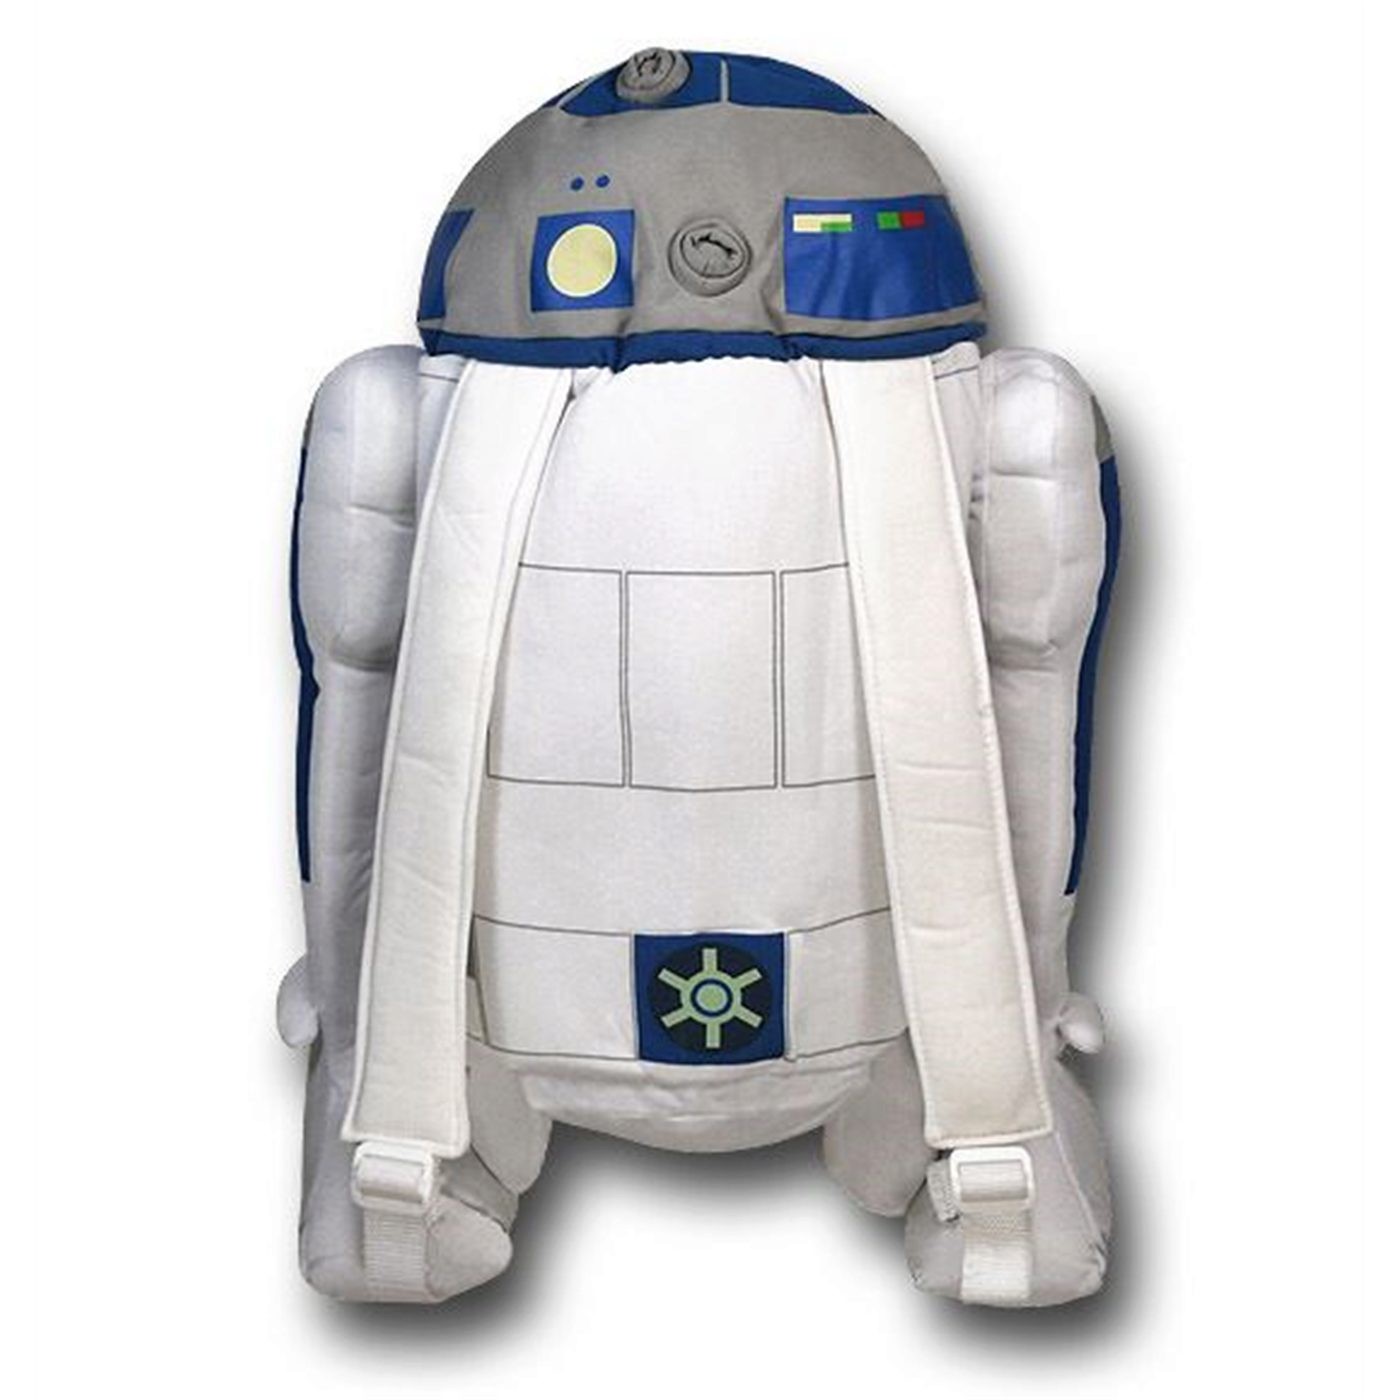 Star Wars R2D2 Backpack Buddy